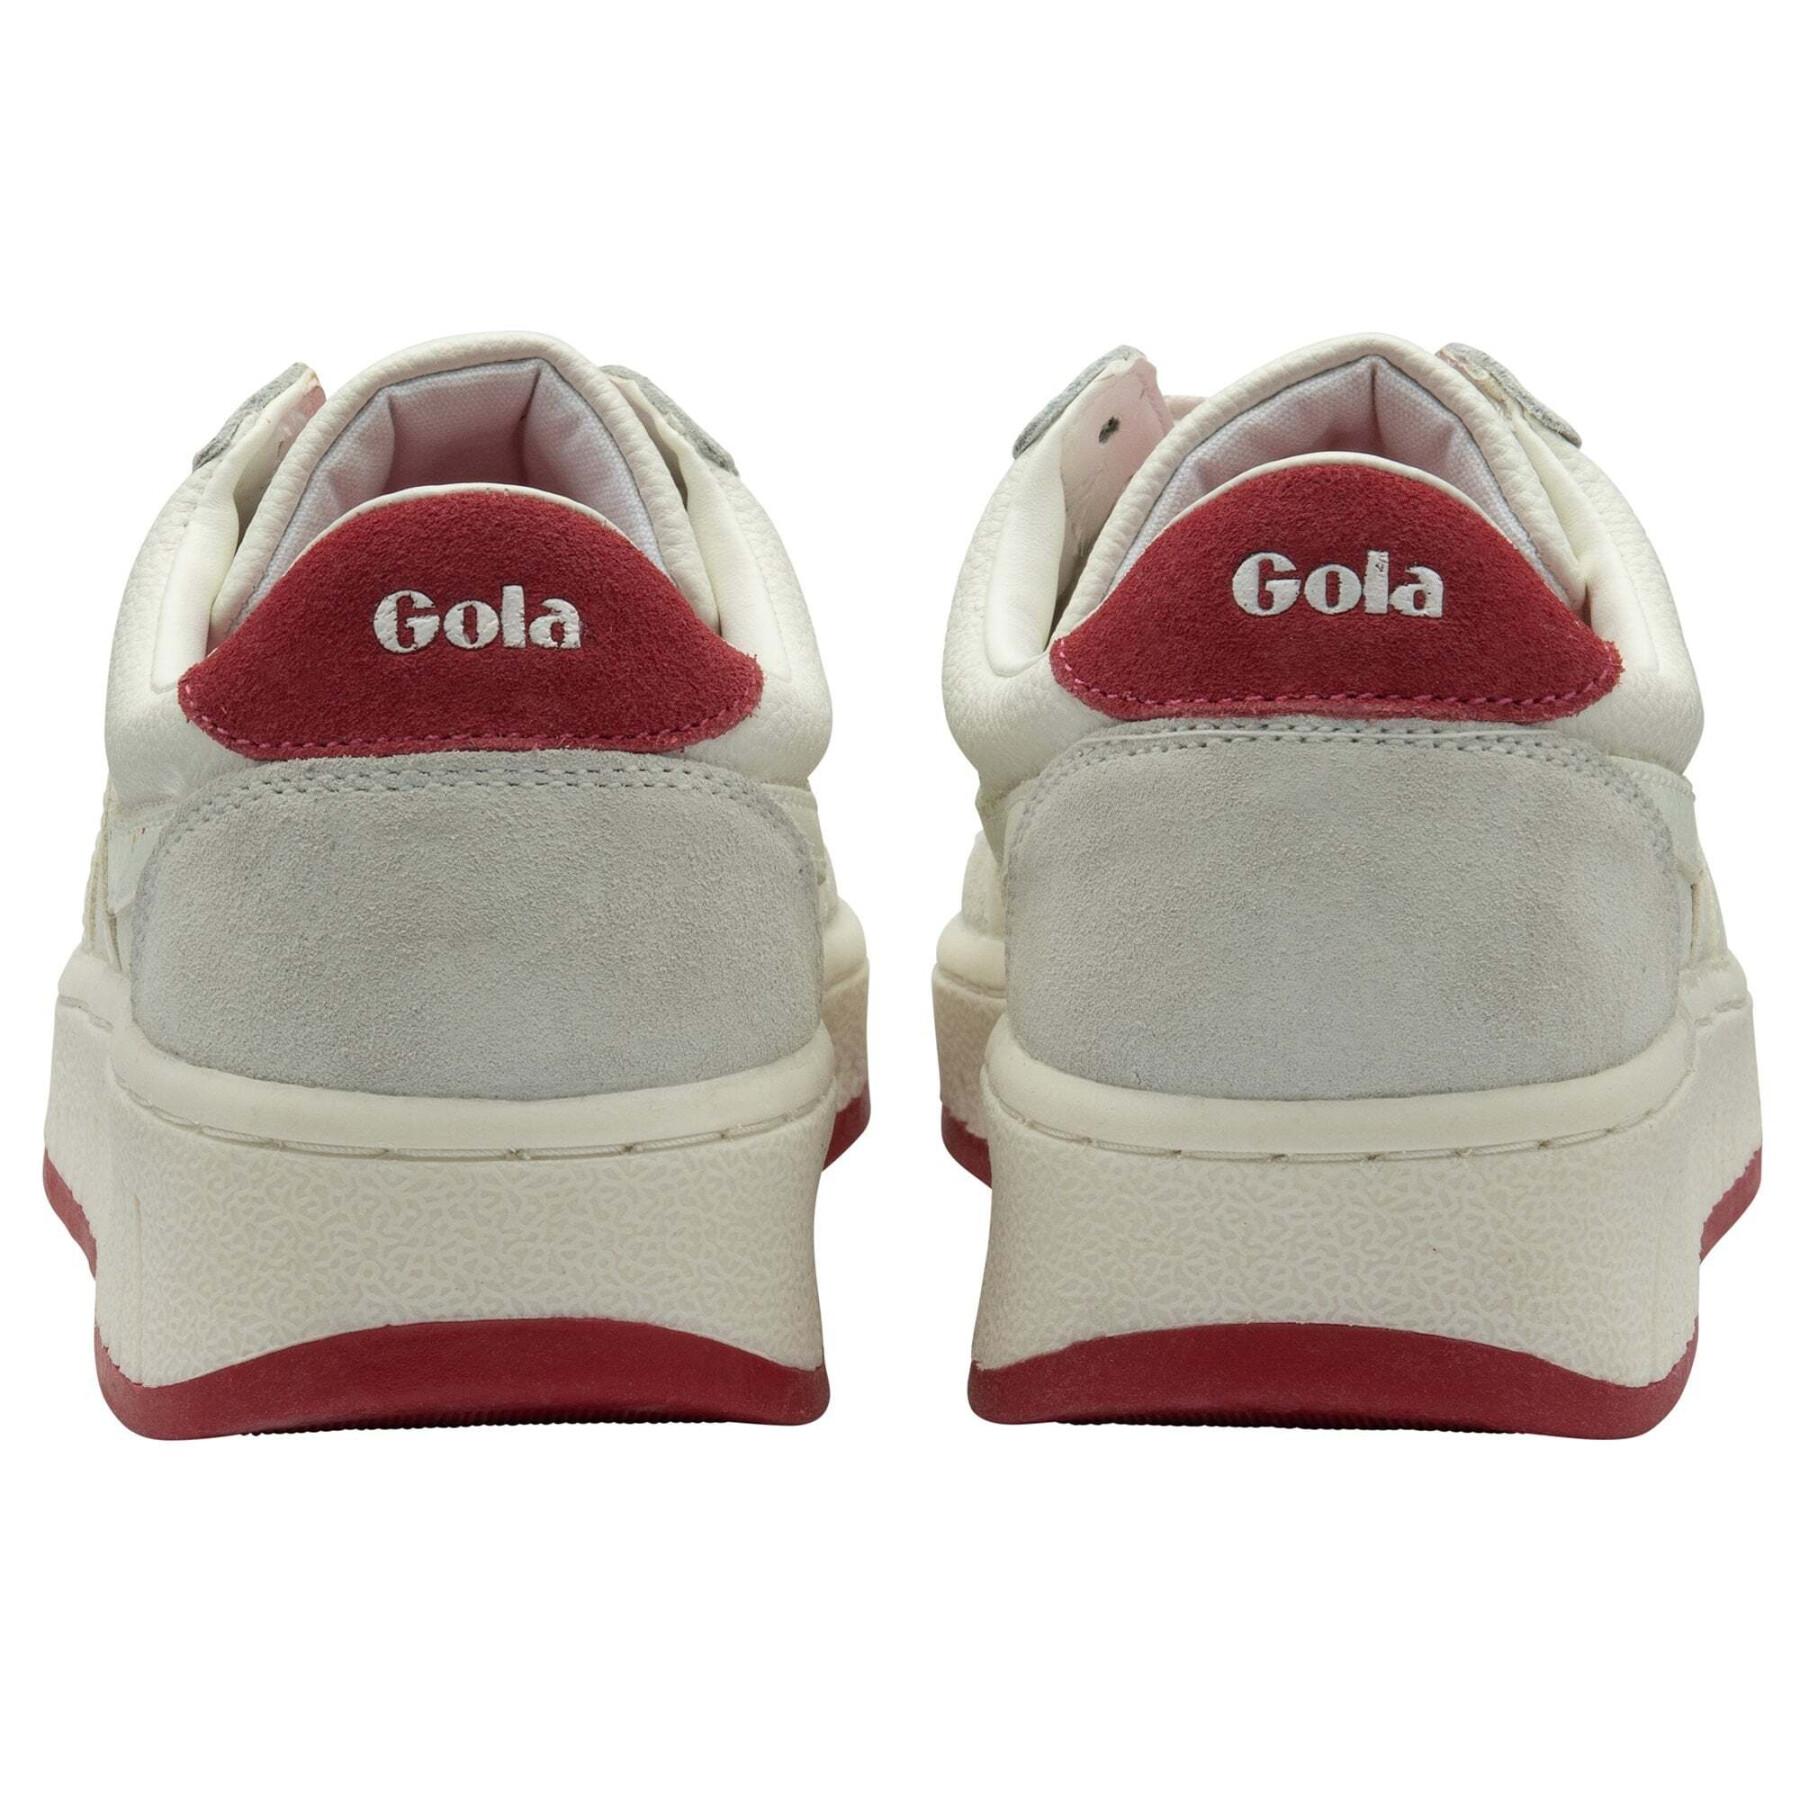 Sneakers für Damen Gola Grandslam 88